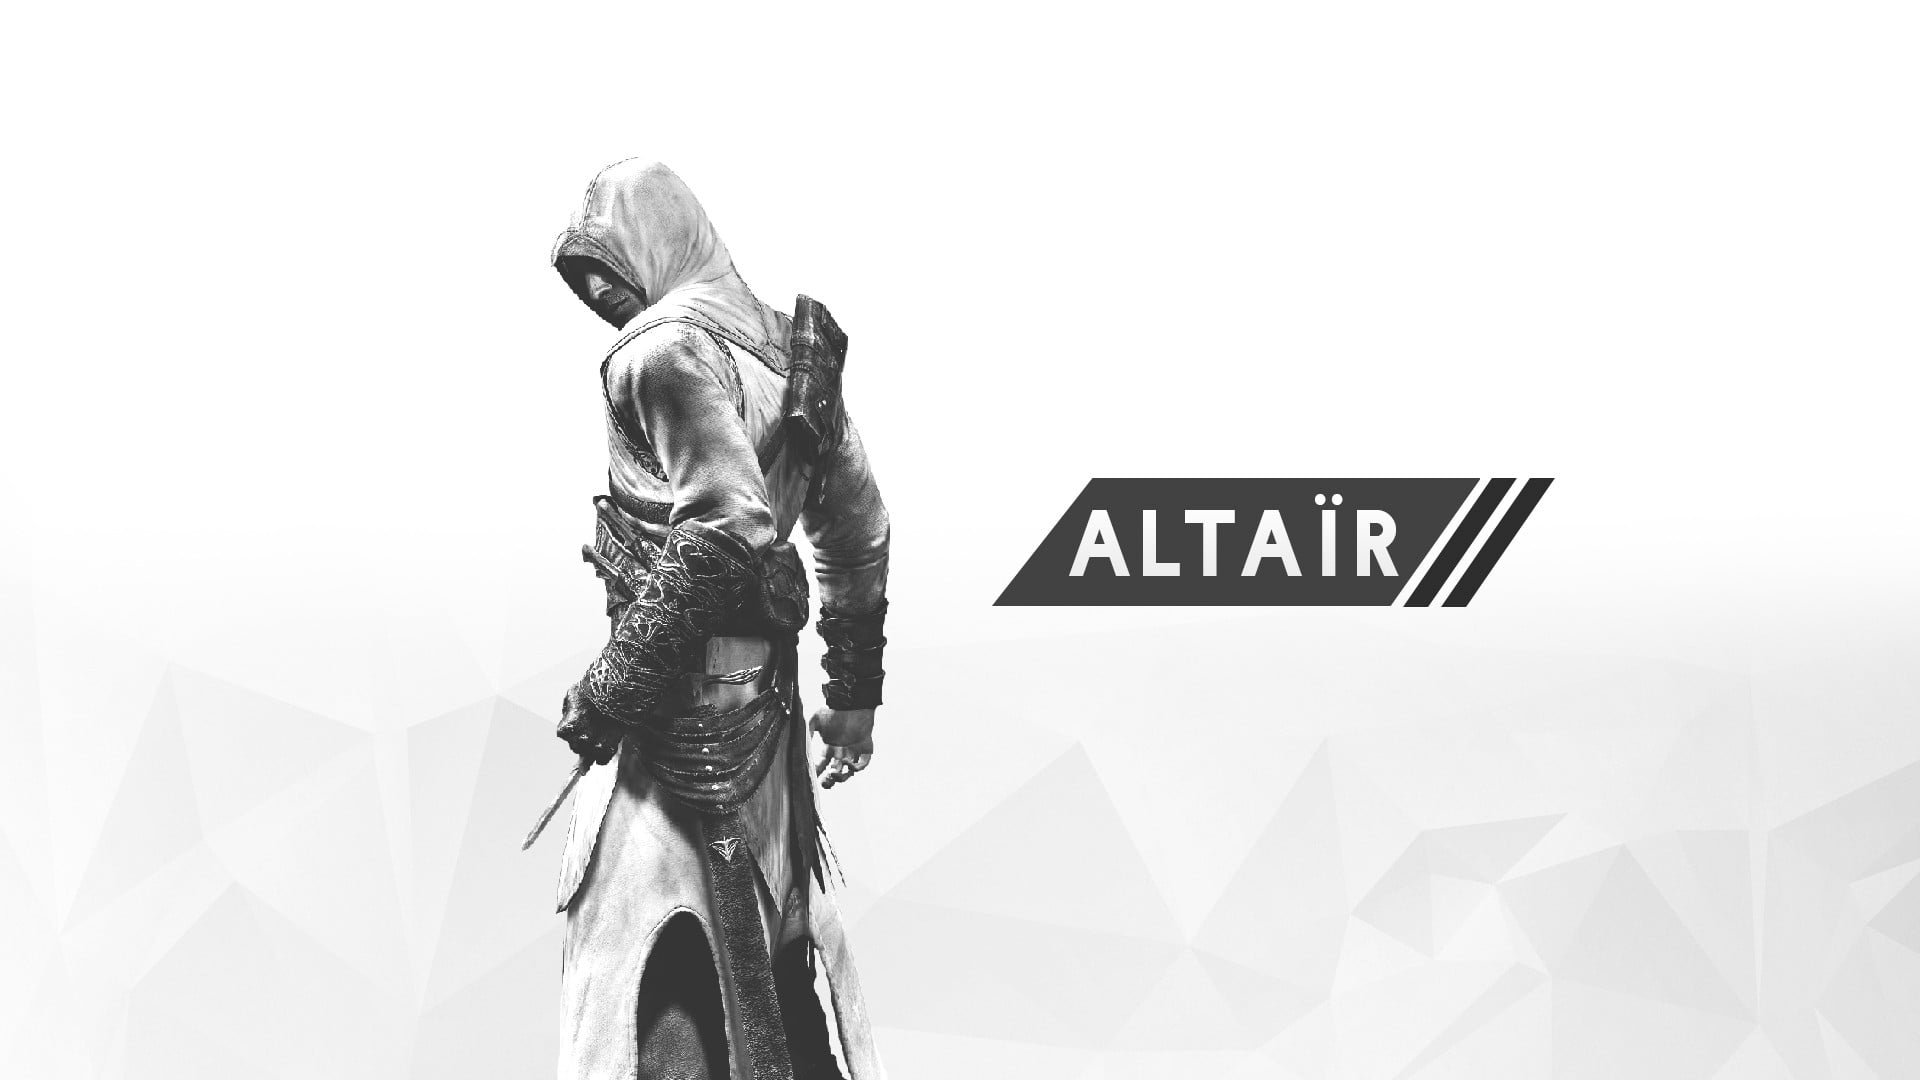 Altair digital wallpaper, Assassin's Creed, digital art, minimalism, 2D